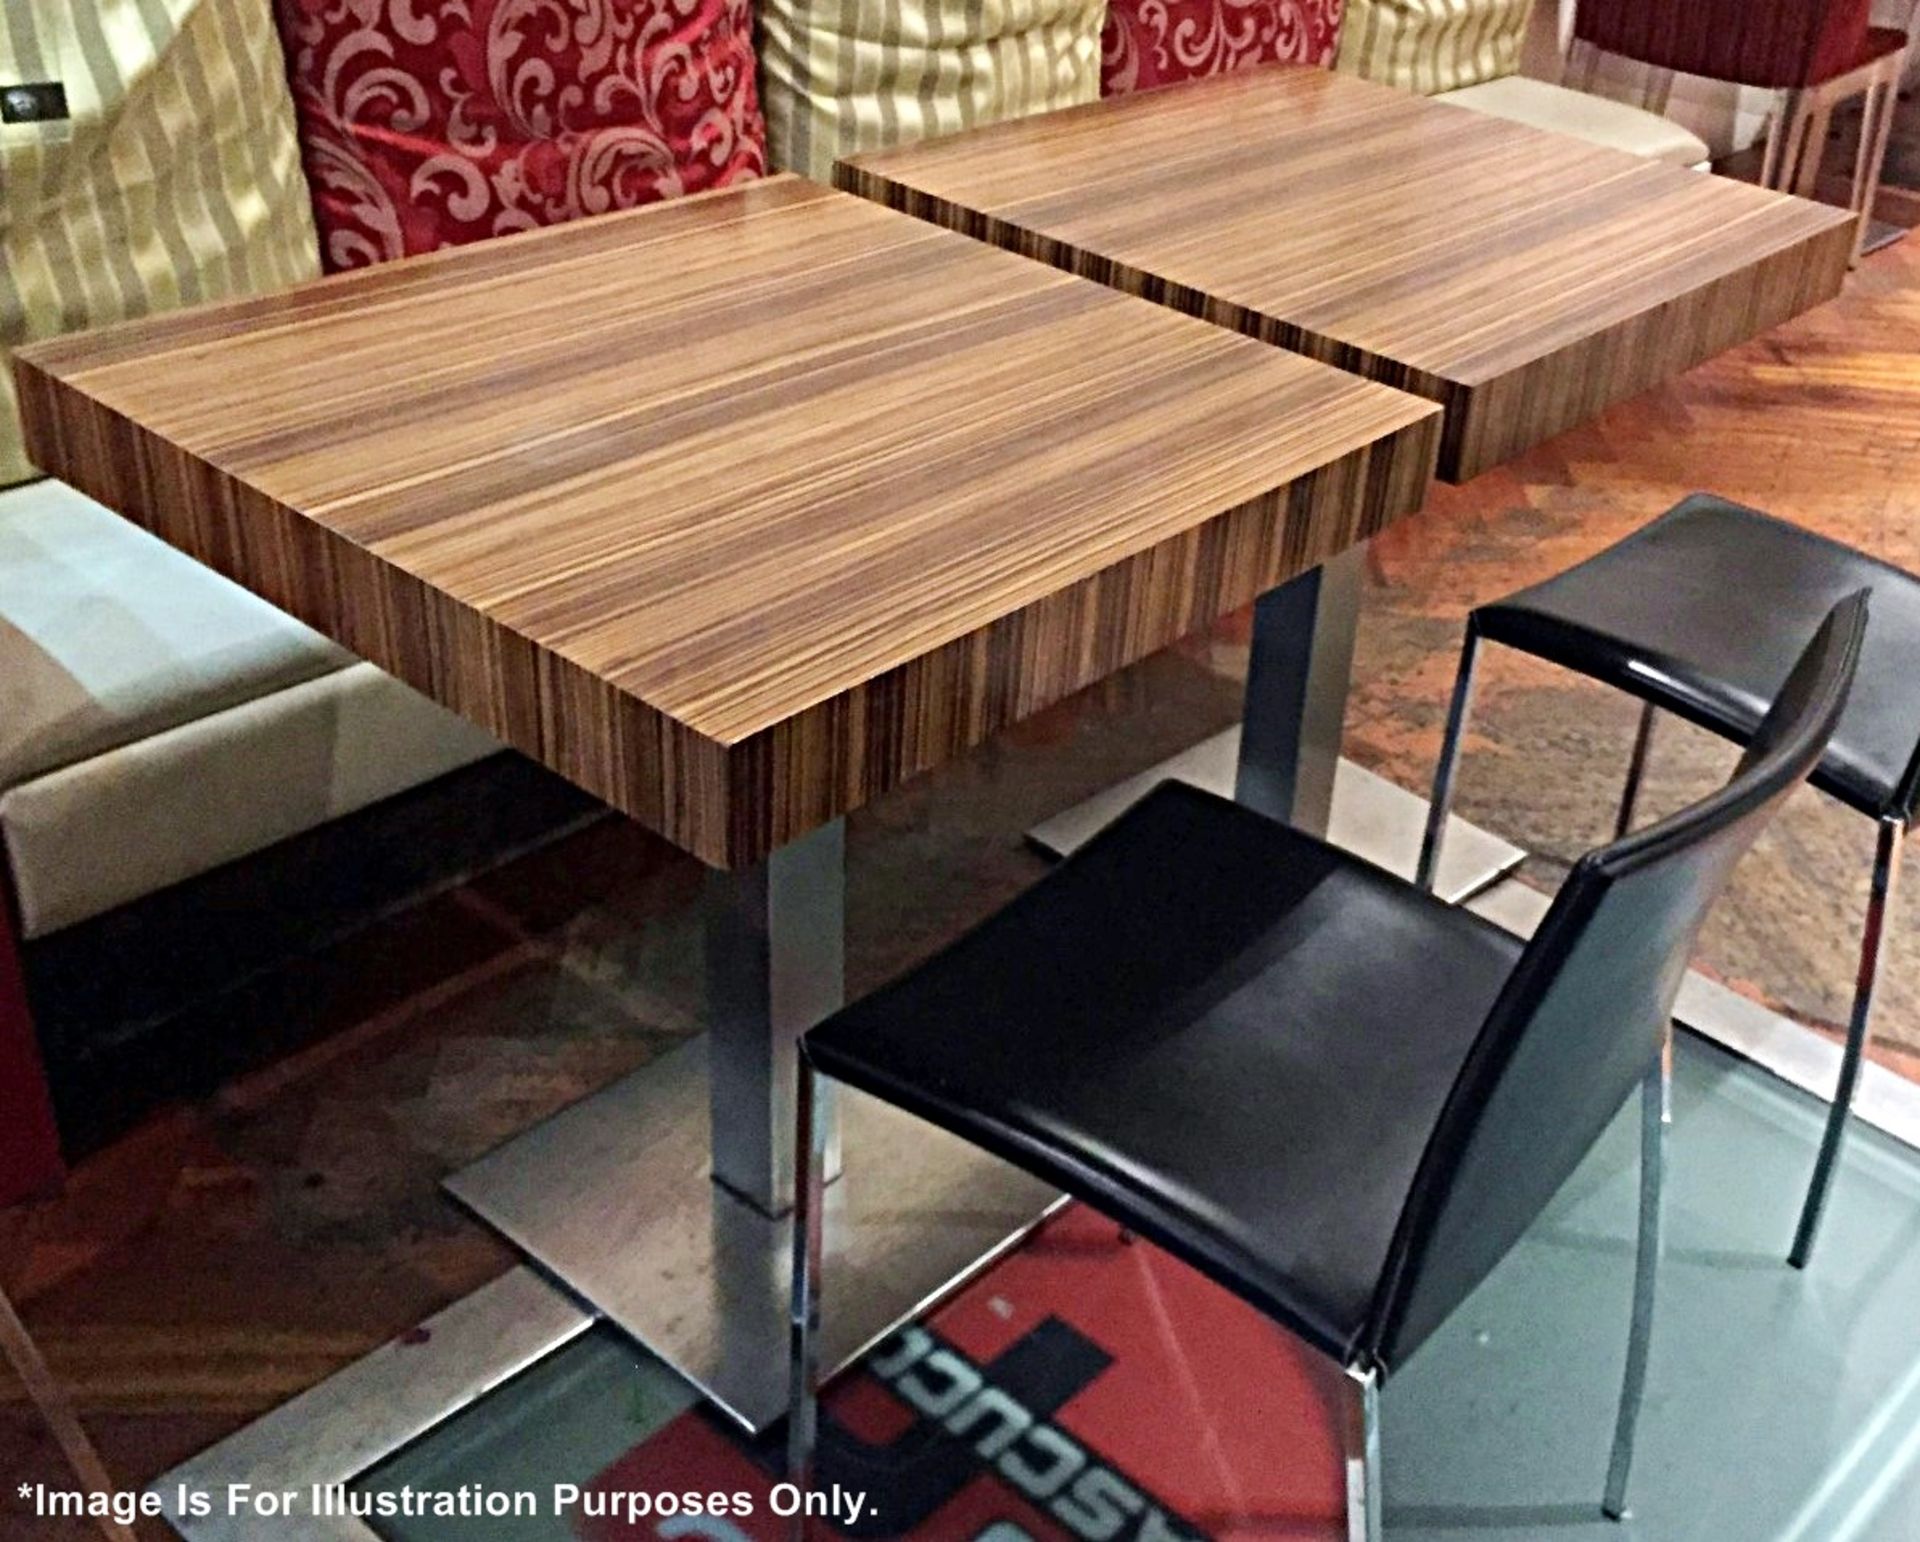 4 x Square Bistro Tables - Dimensions: H76 x W70 x D70cm - City Centre Restaurant Closure - Supplied